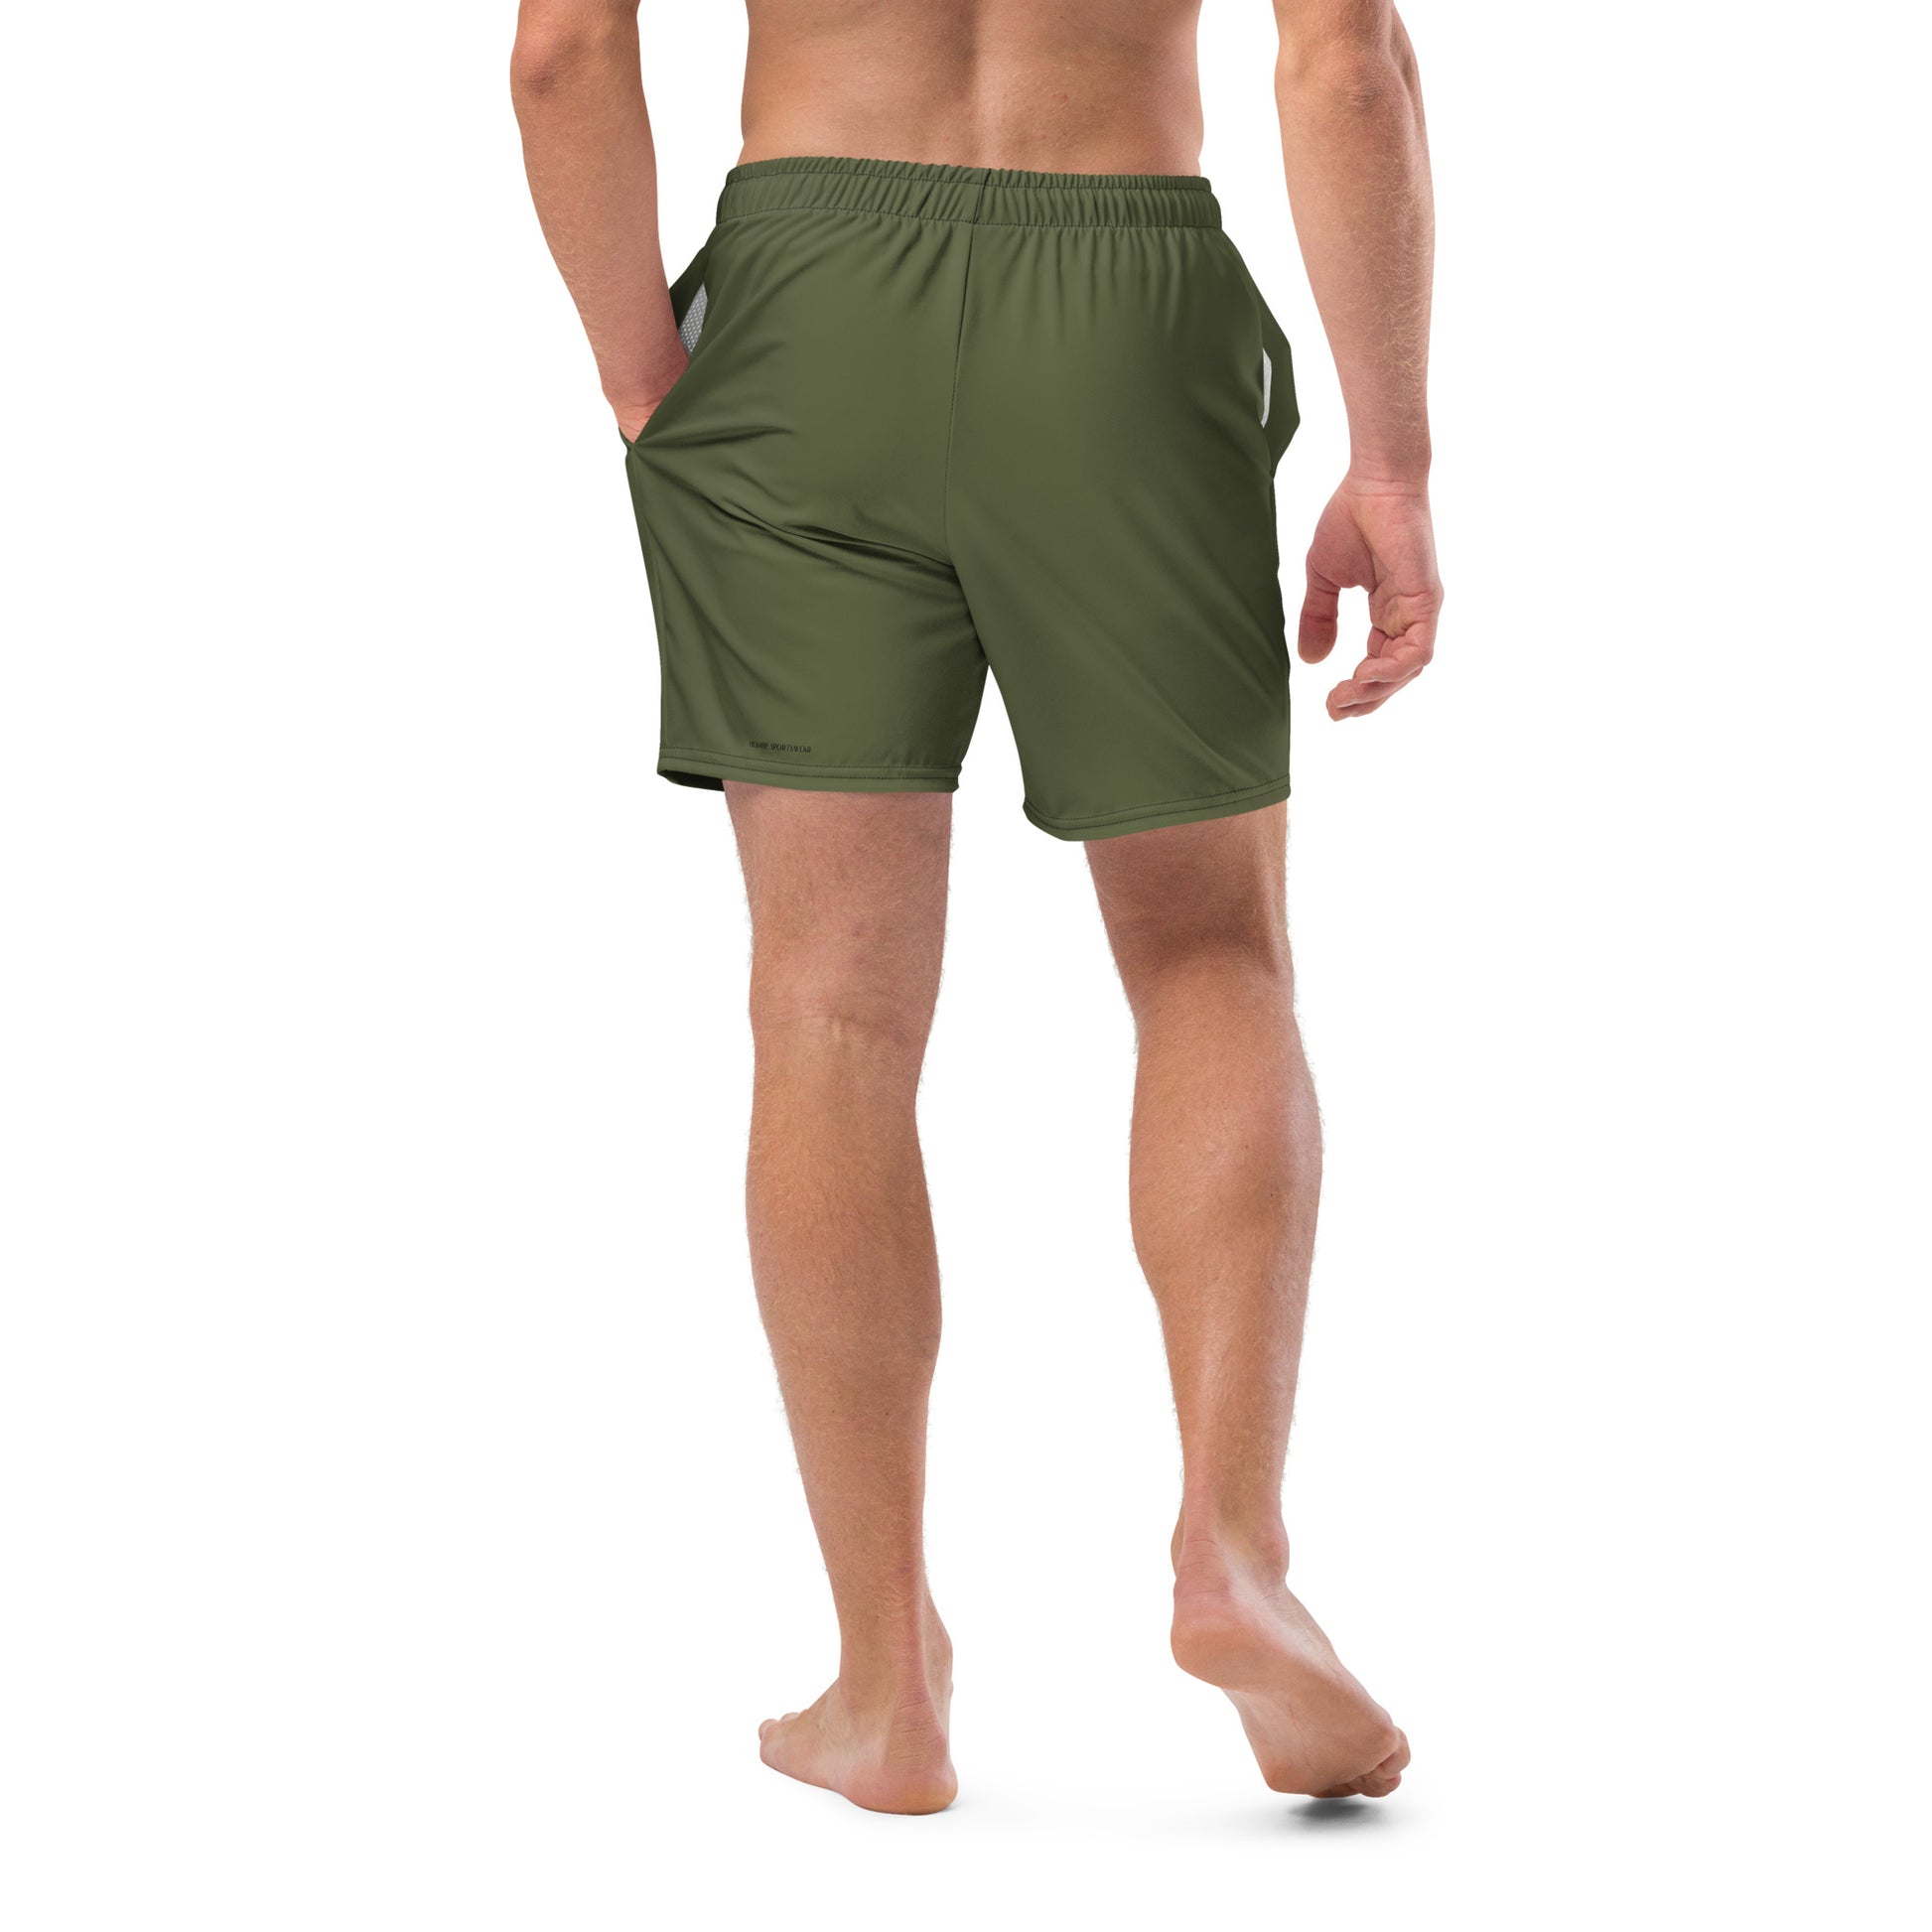 Humble sportswear, men's Color Match green anti-chaffing beach swim trunks with moisture-wicking fabrics